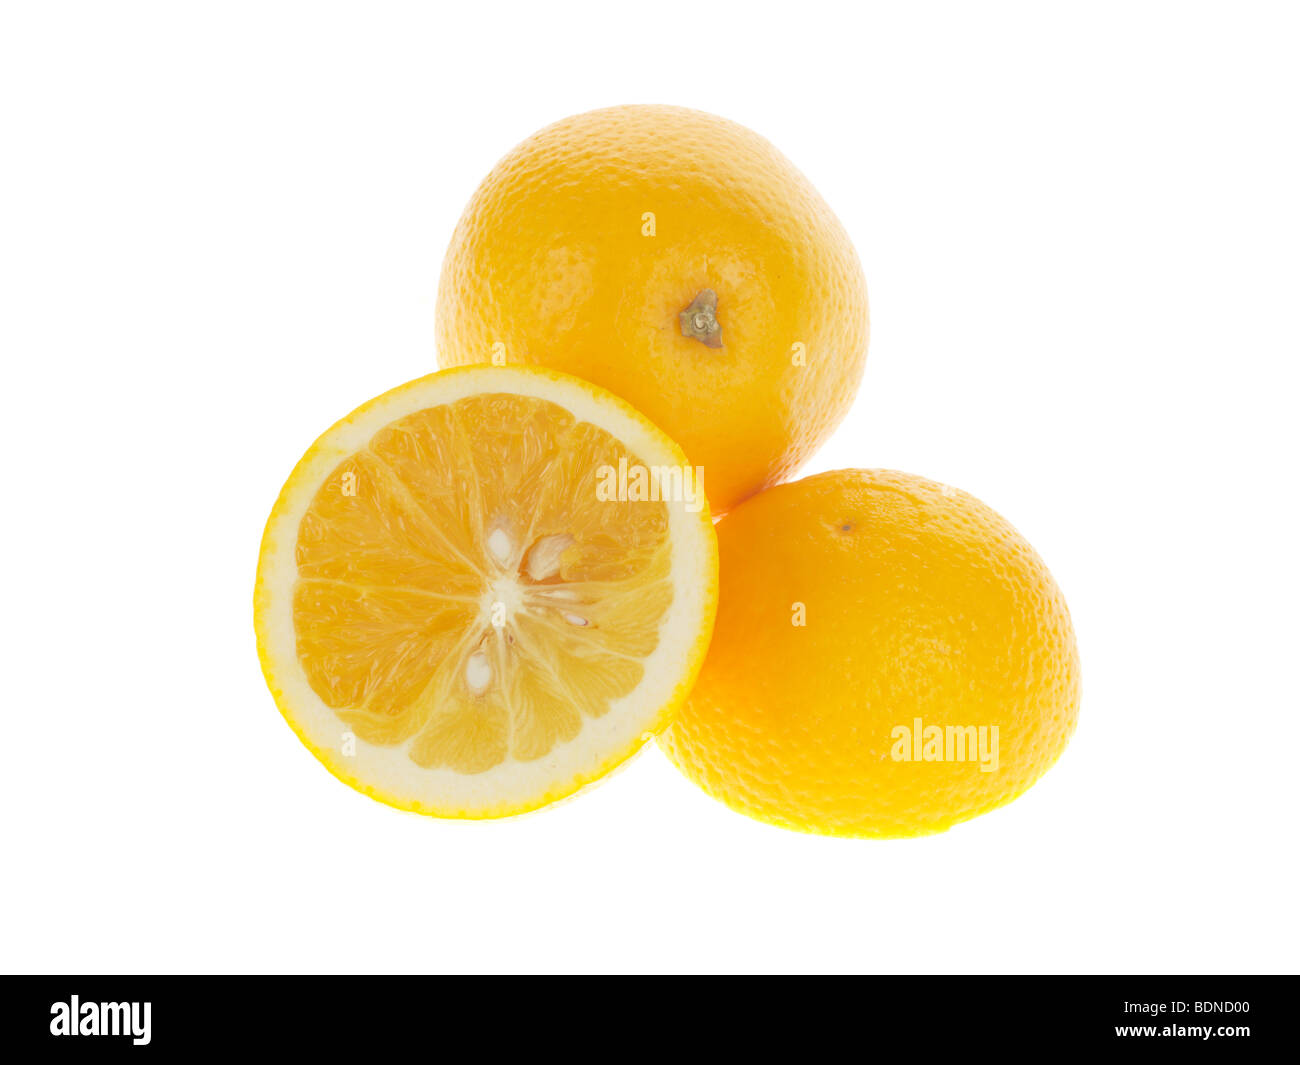 Apfelsinen oranges -Fotos und -Bildmaterial in hoher Auflösung – Alamy